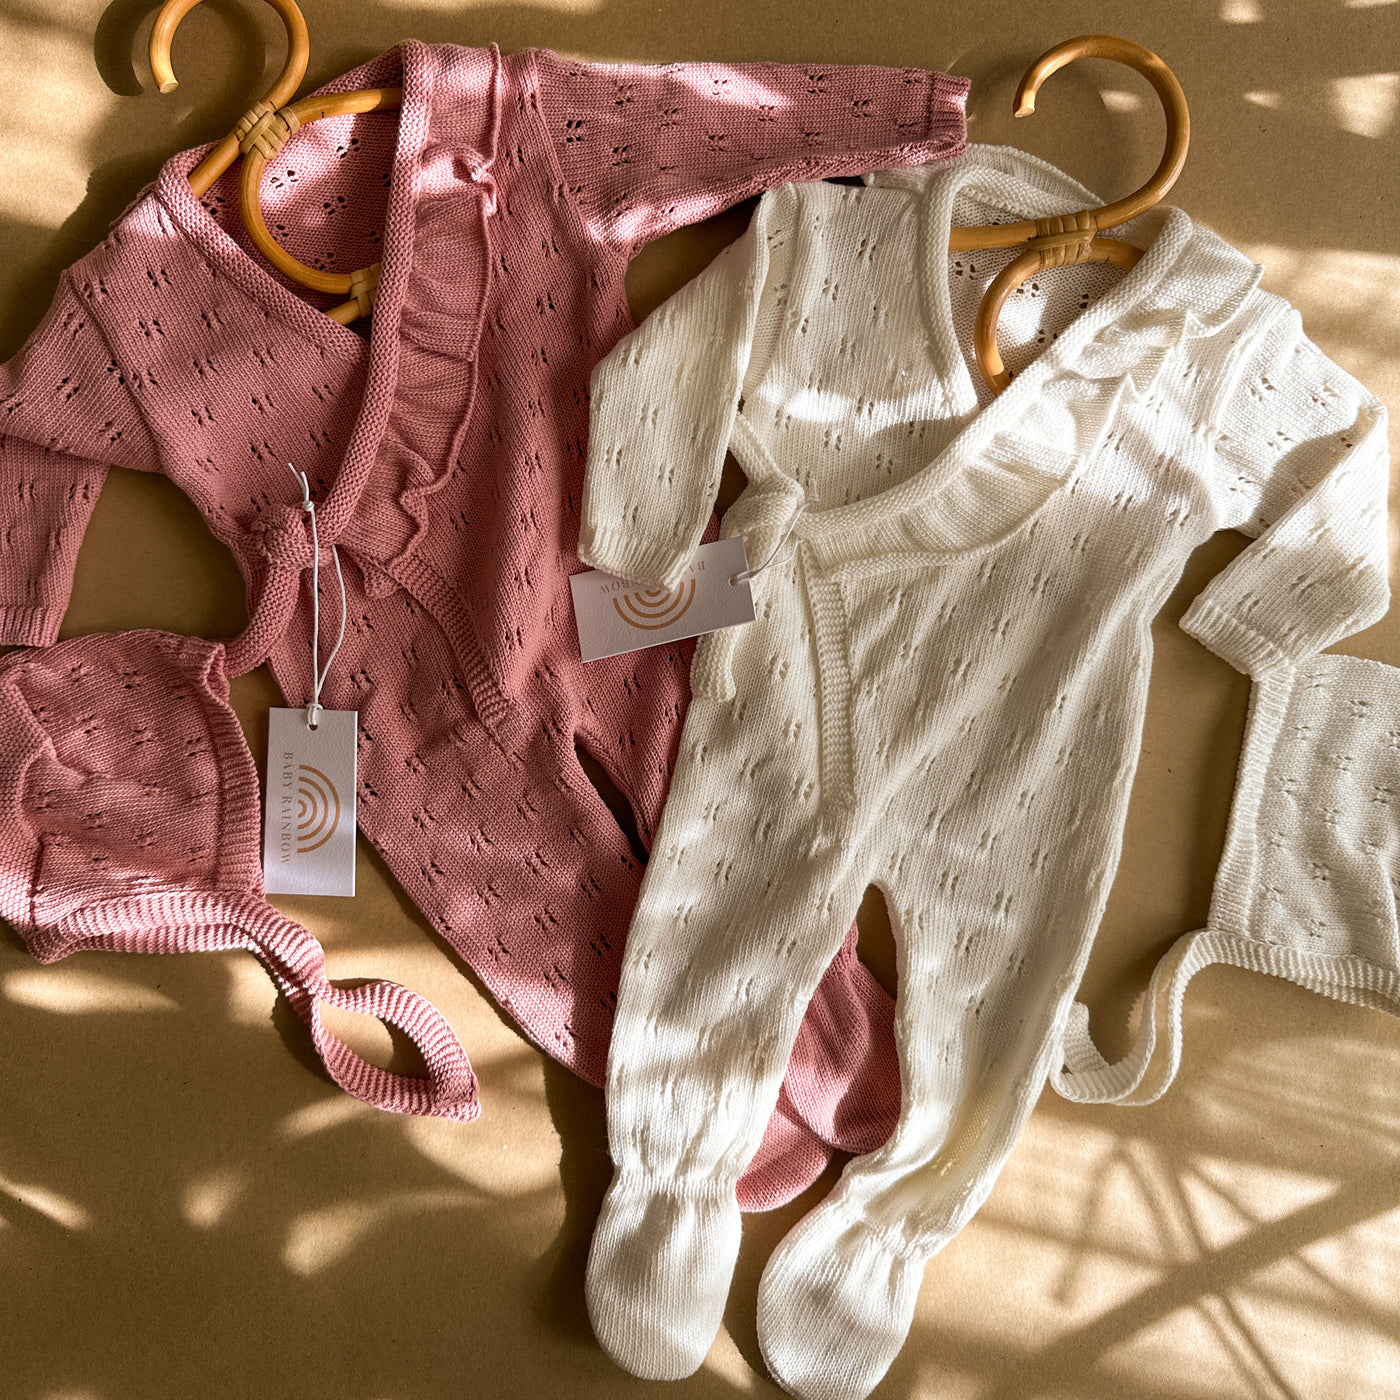 Tutina a maglia traforata AMORE - Baby Clothes - Baby Rainbow Shop - P.IVA 04847500230